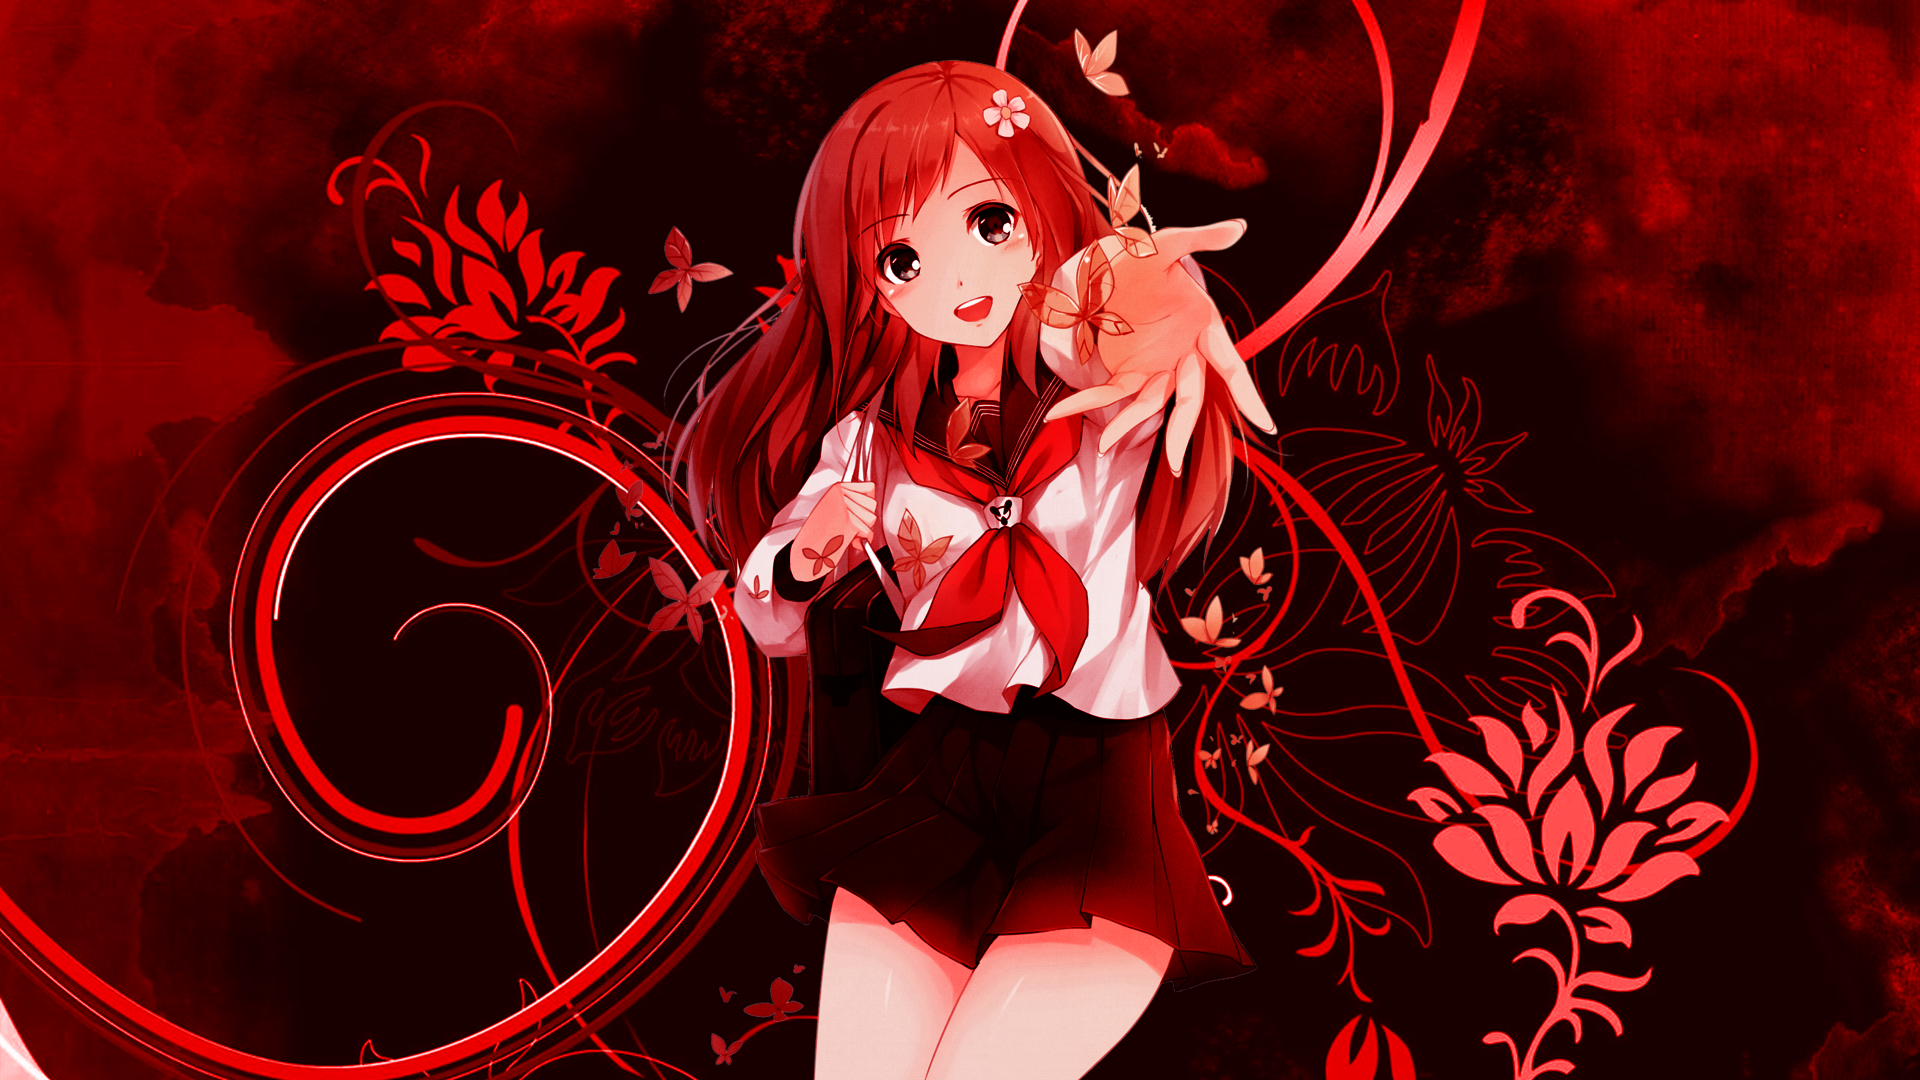 Anime 1920x1080 anime girls artwork anime redhead long hair school uniform miniskirt swirls red background looking at viewer